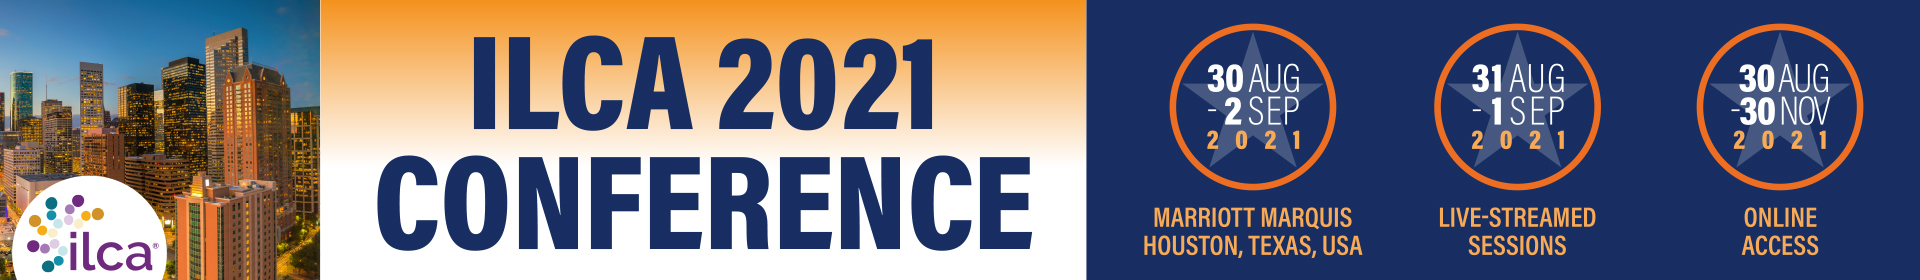 ILCA 2021 Annual Conference Event Banner